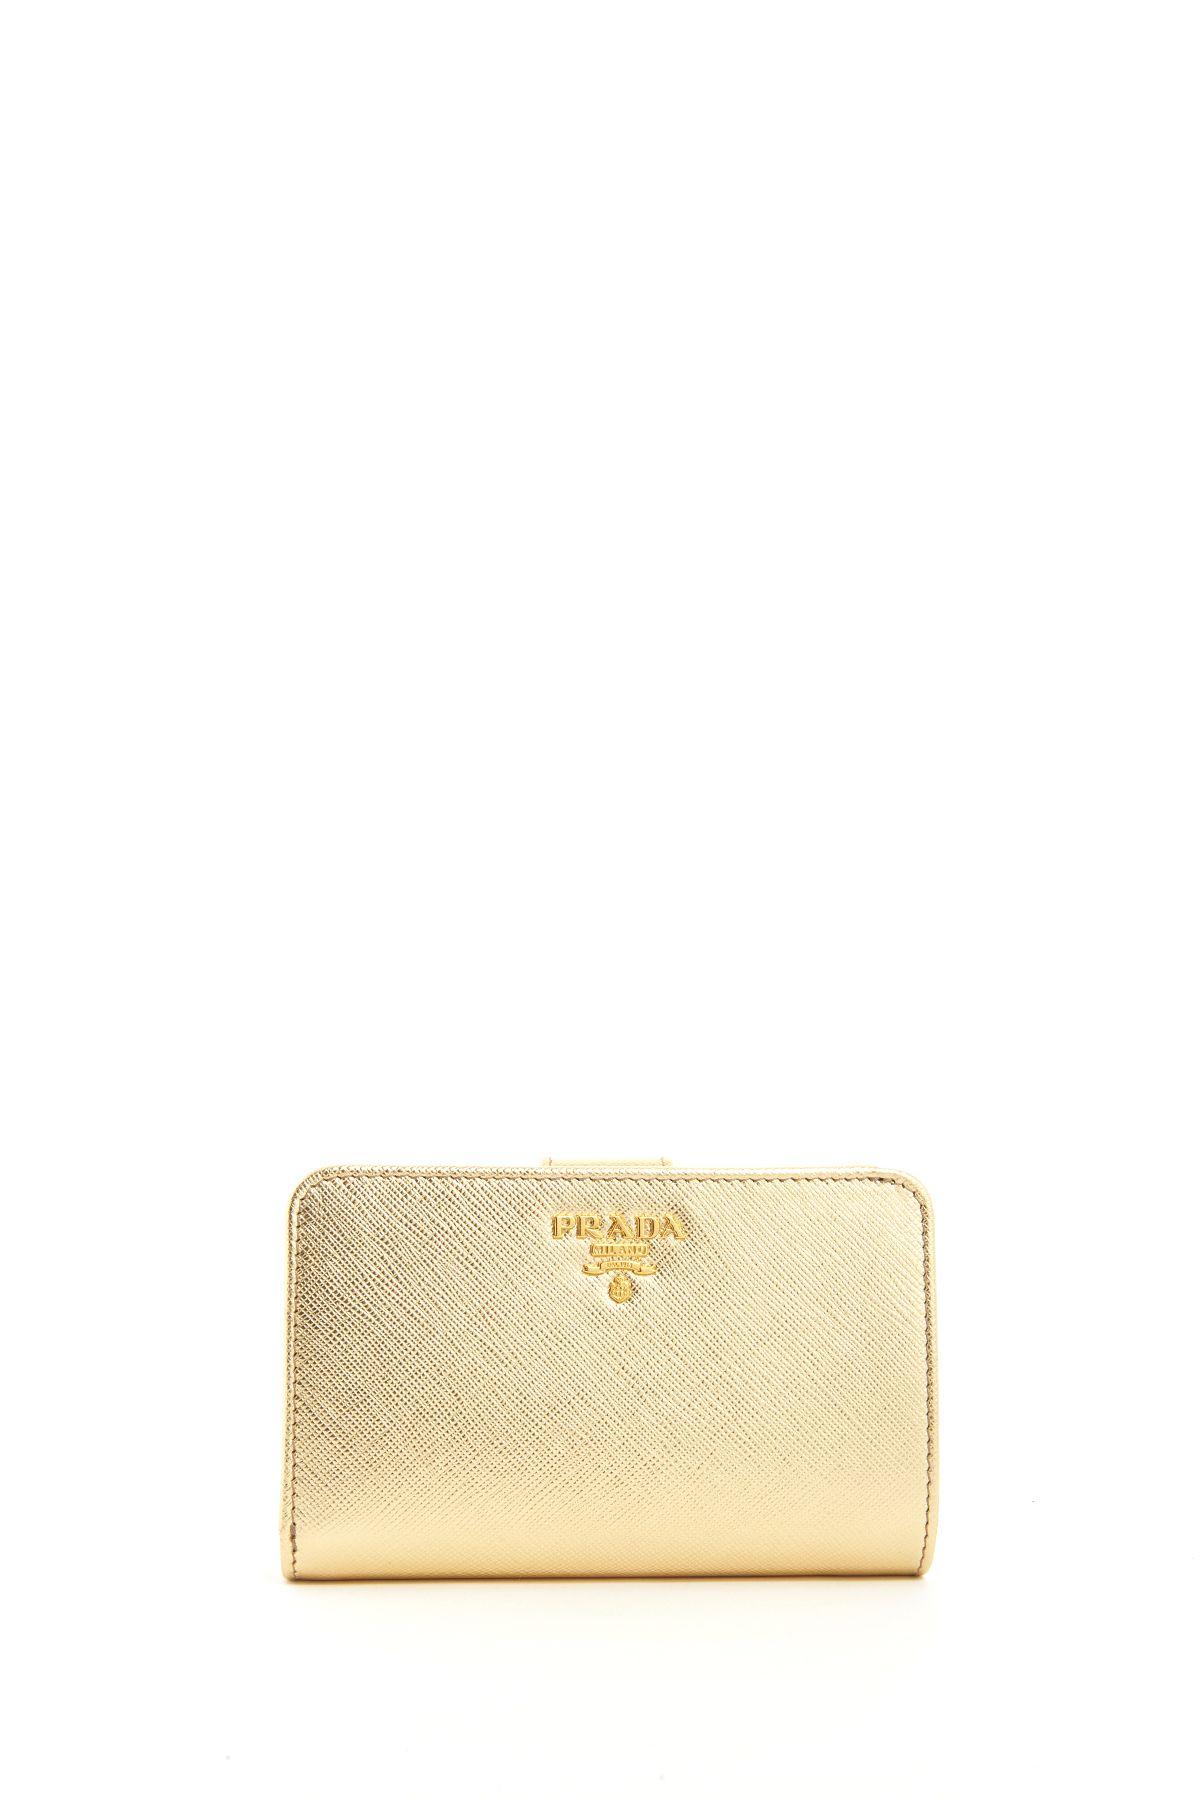 prada wallet gold